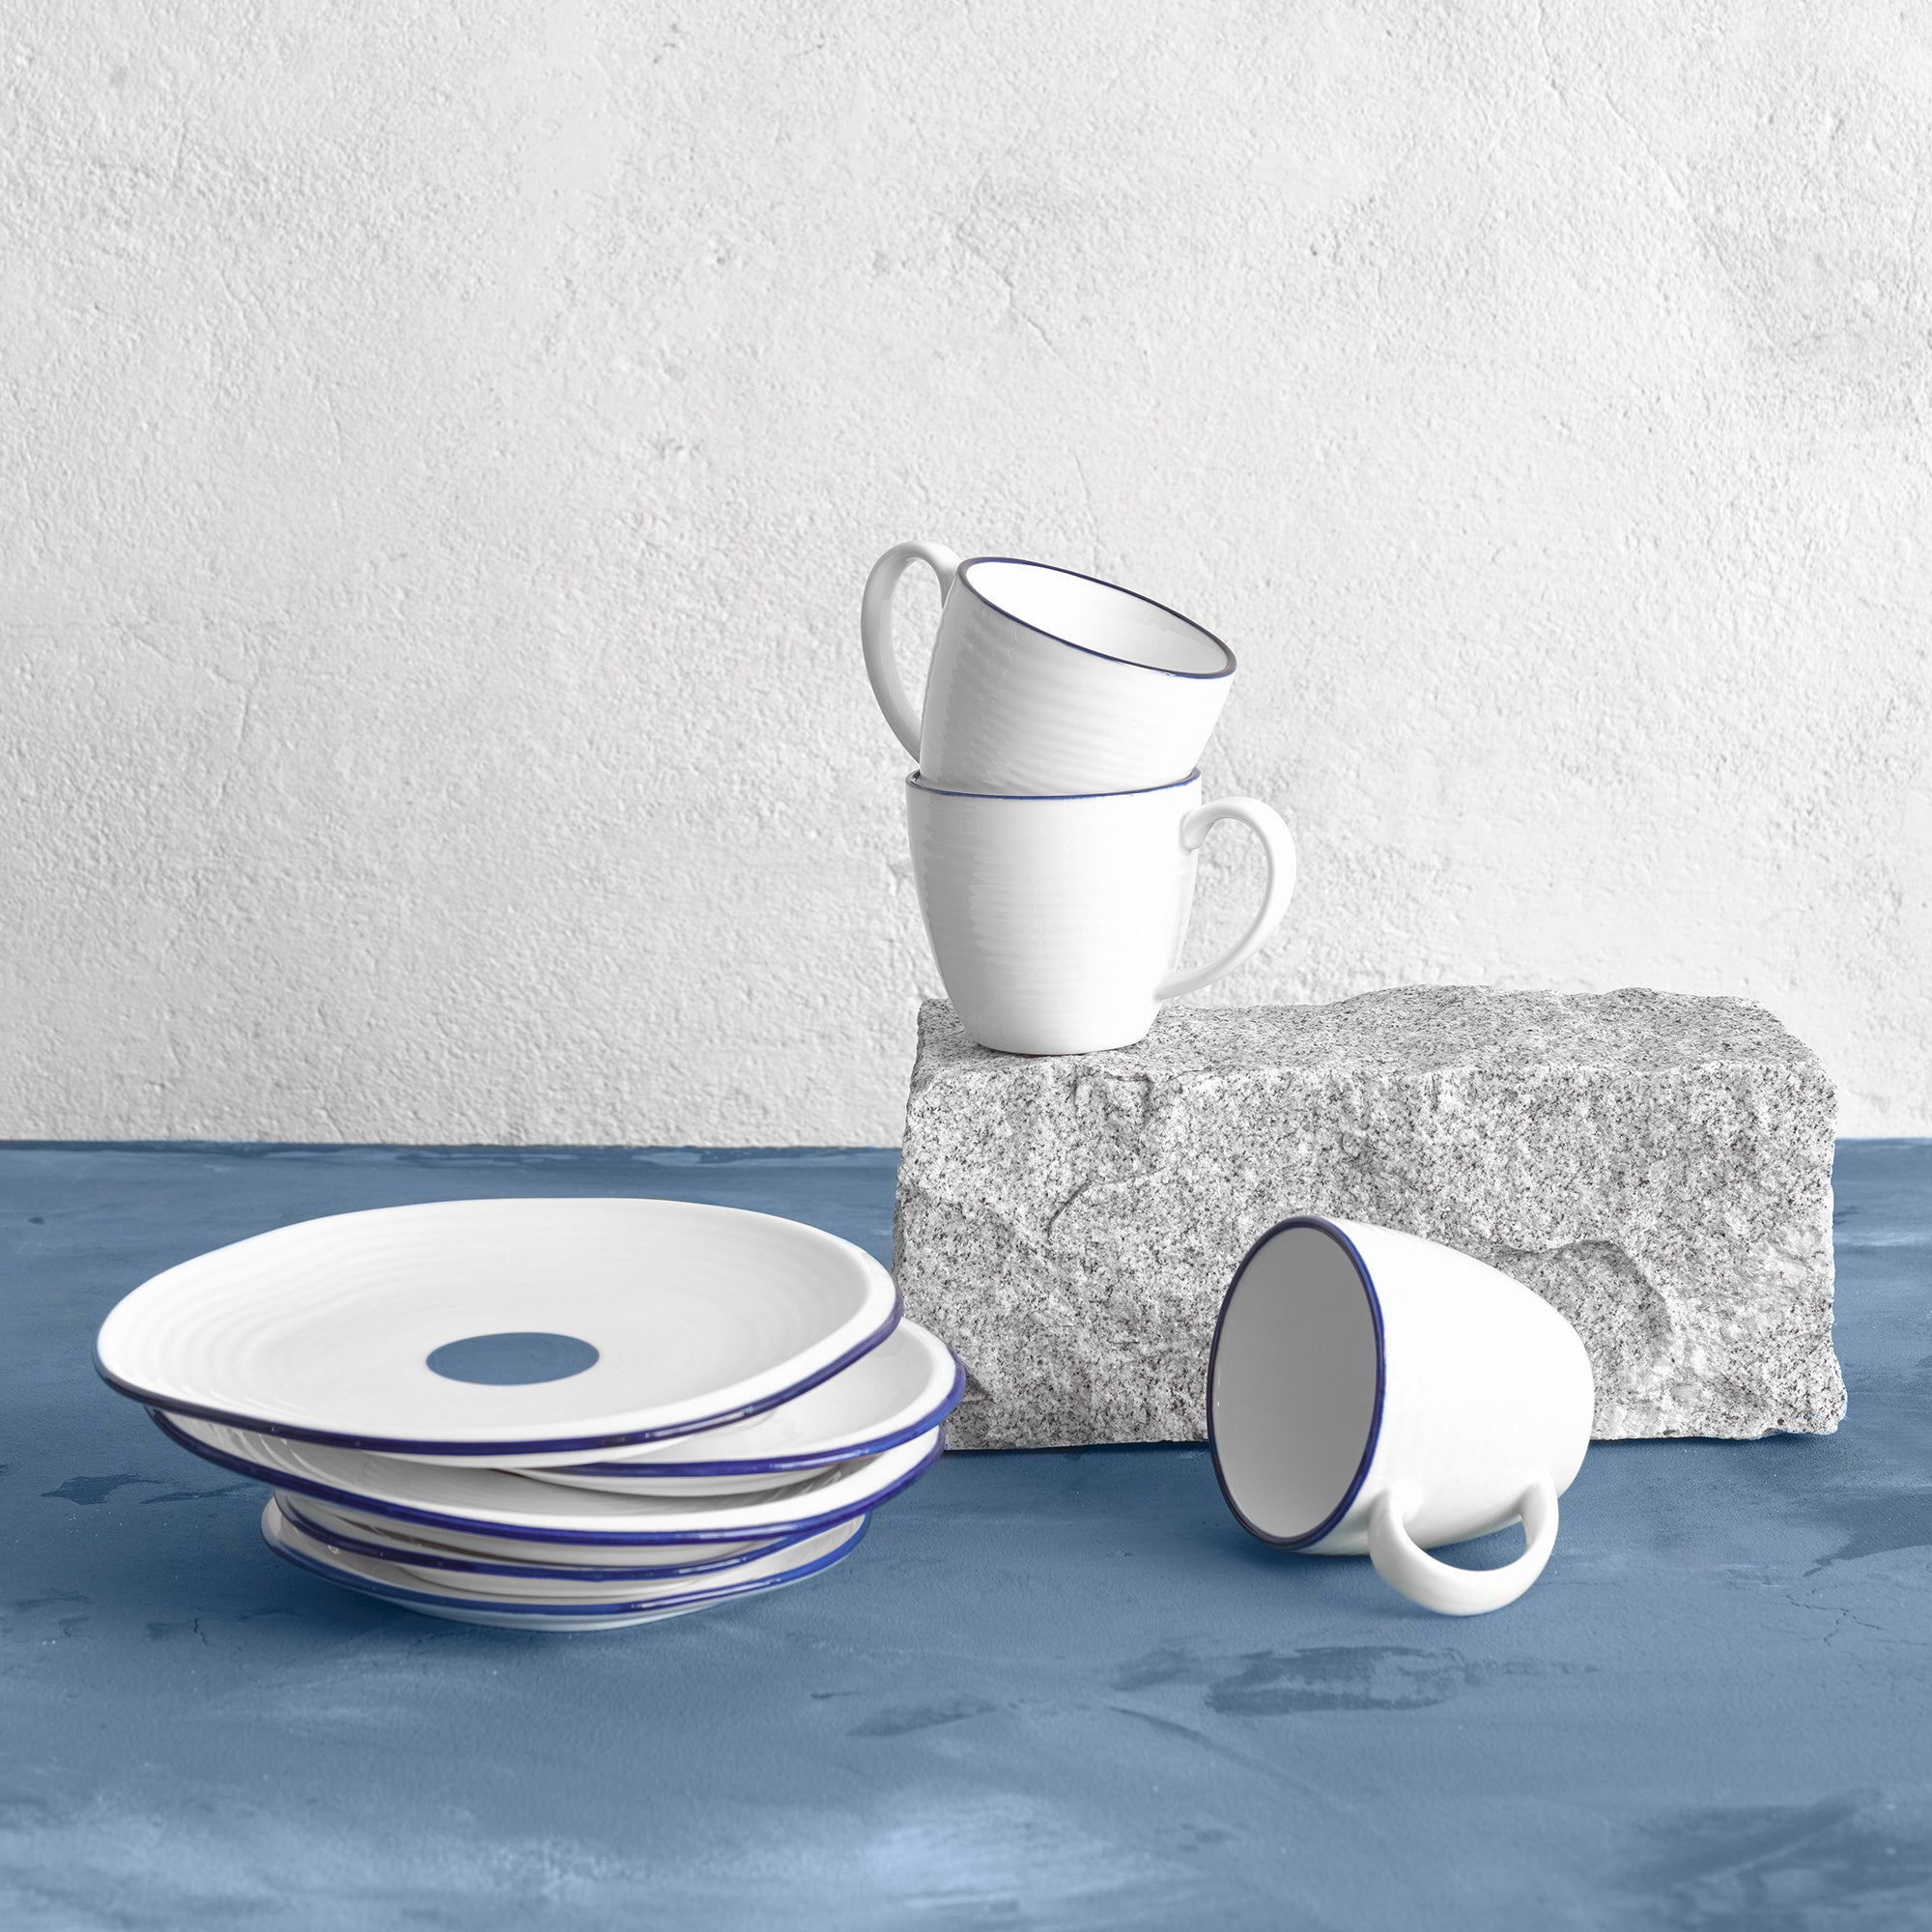 22-OZ White Porcelain Bowl with Blue Accent - Set of Six